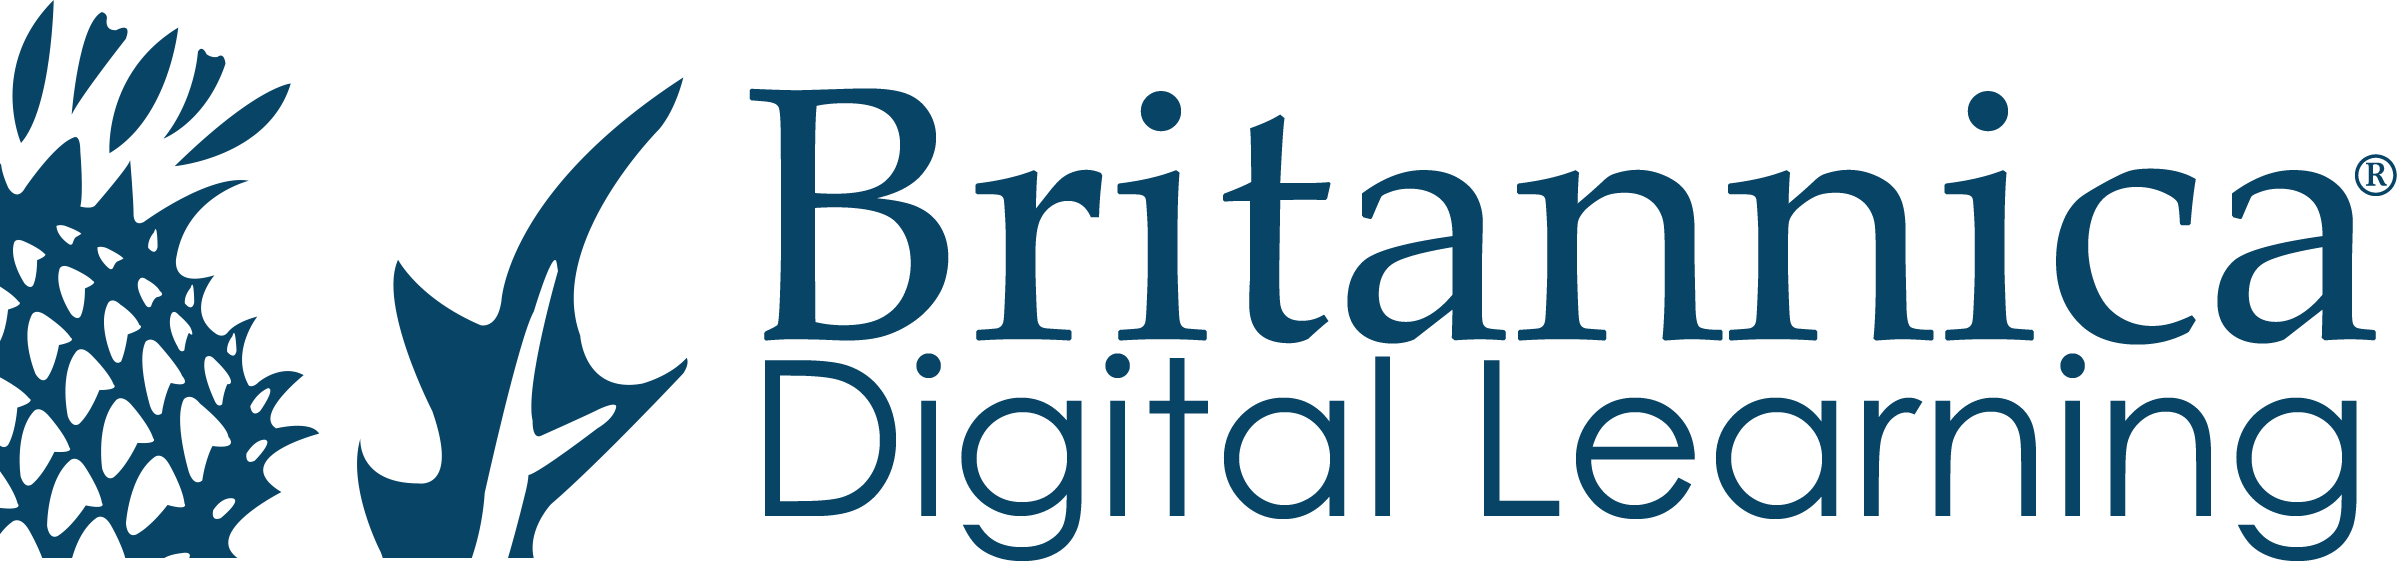 Britannica bdl_logo_nu_blue